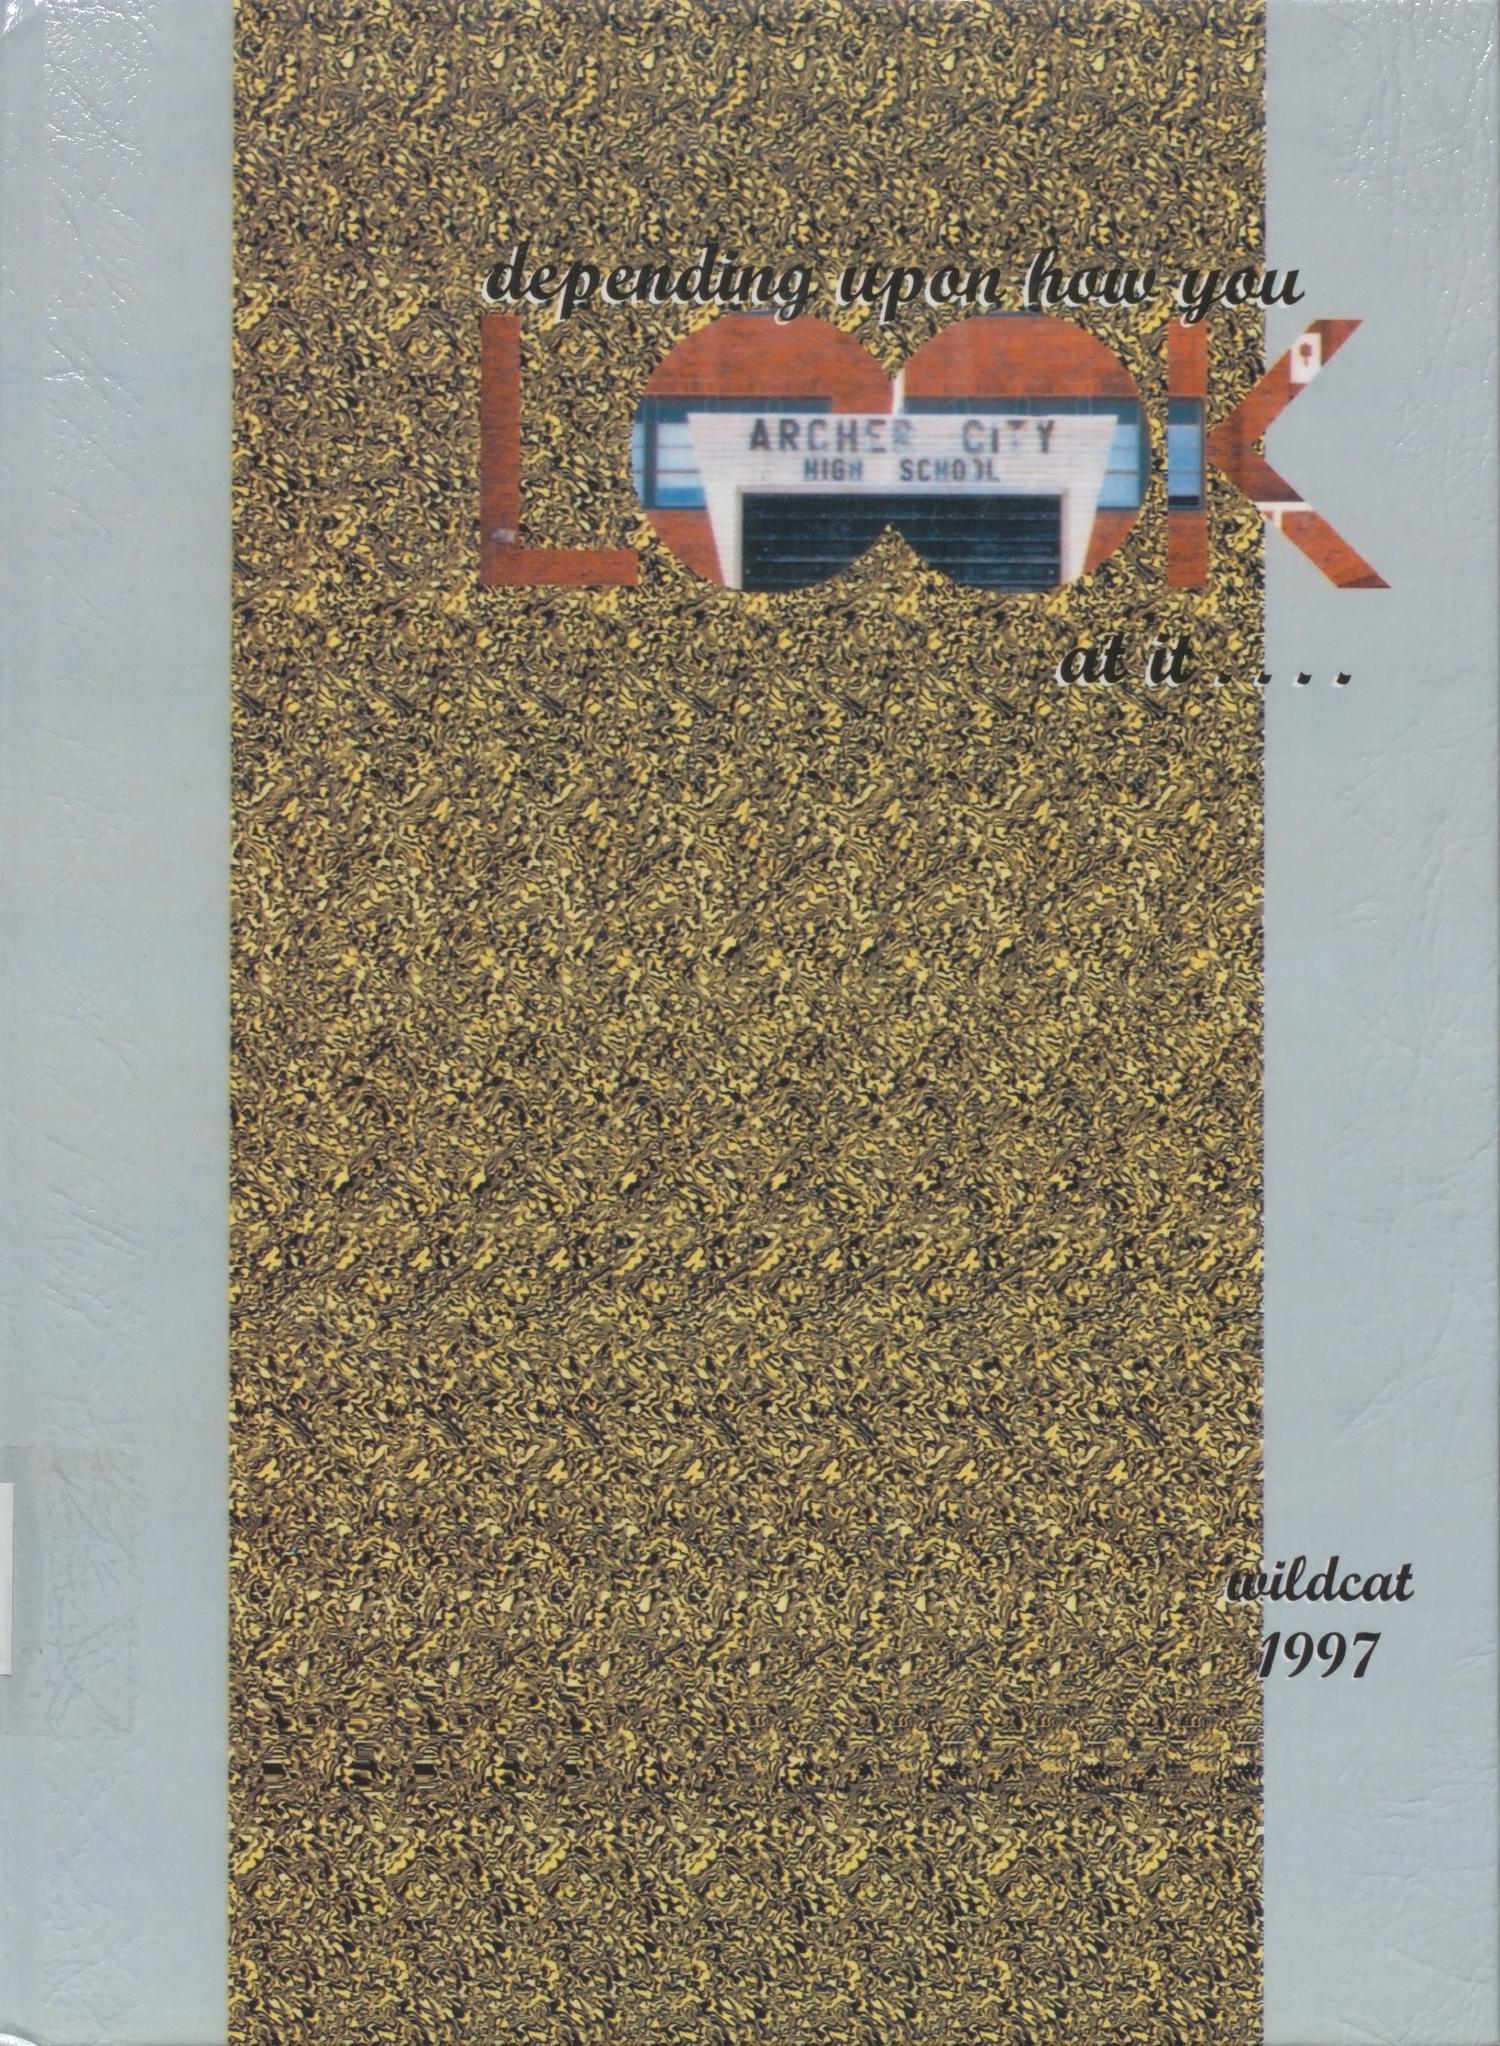 The Wildcat, Yearbook of Archer City Schools, 1997
                                                
                                                    Front Cover
                                                